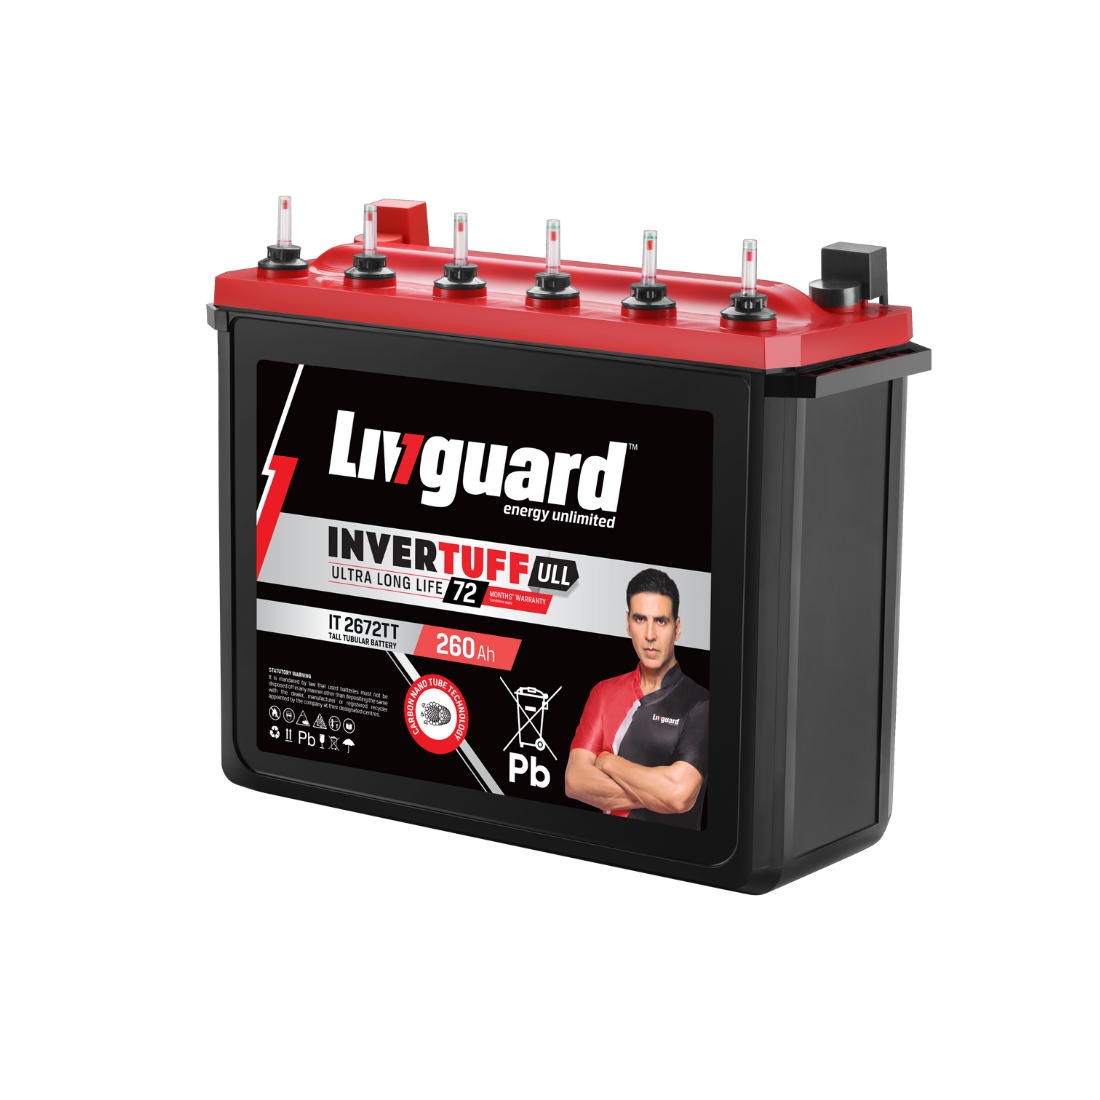 Livguard INVERTUFF IT9048ST Inverter Battery 90 Ah